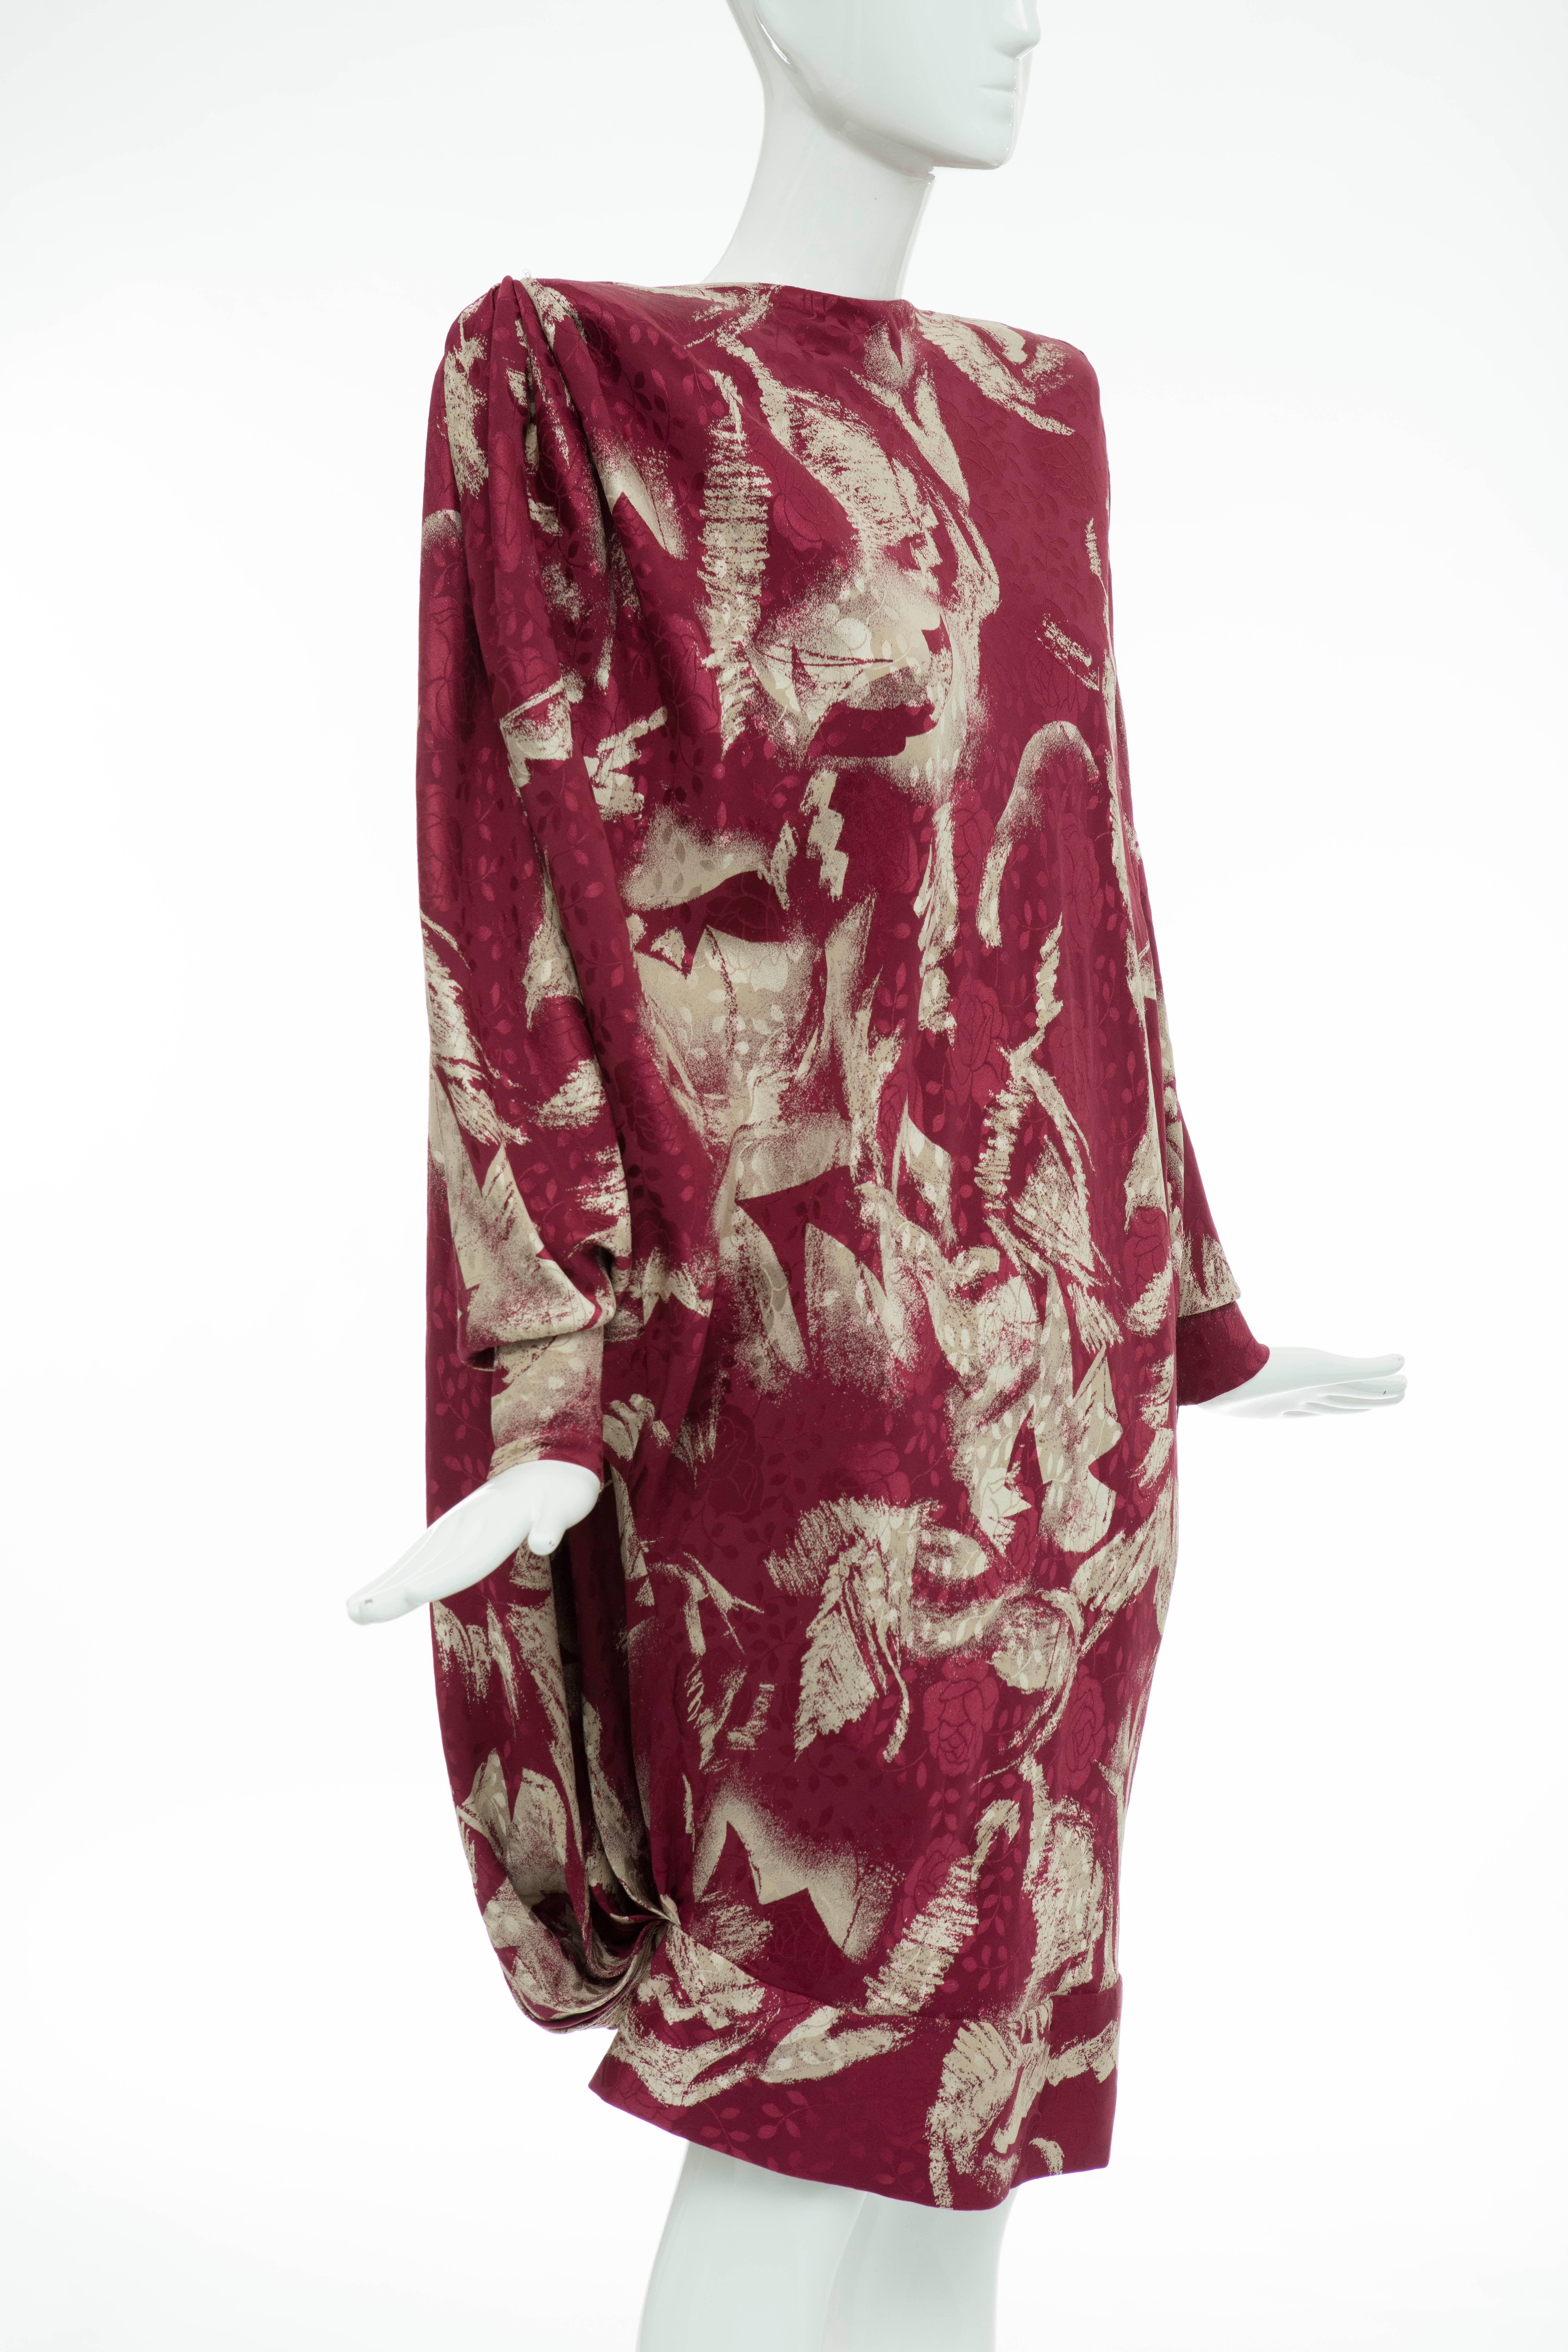 Women's Emanuel Ungaro Couture Paris Printed Silk Balloon Collection Dress, Circa 1980s For Sale